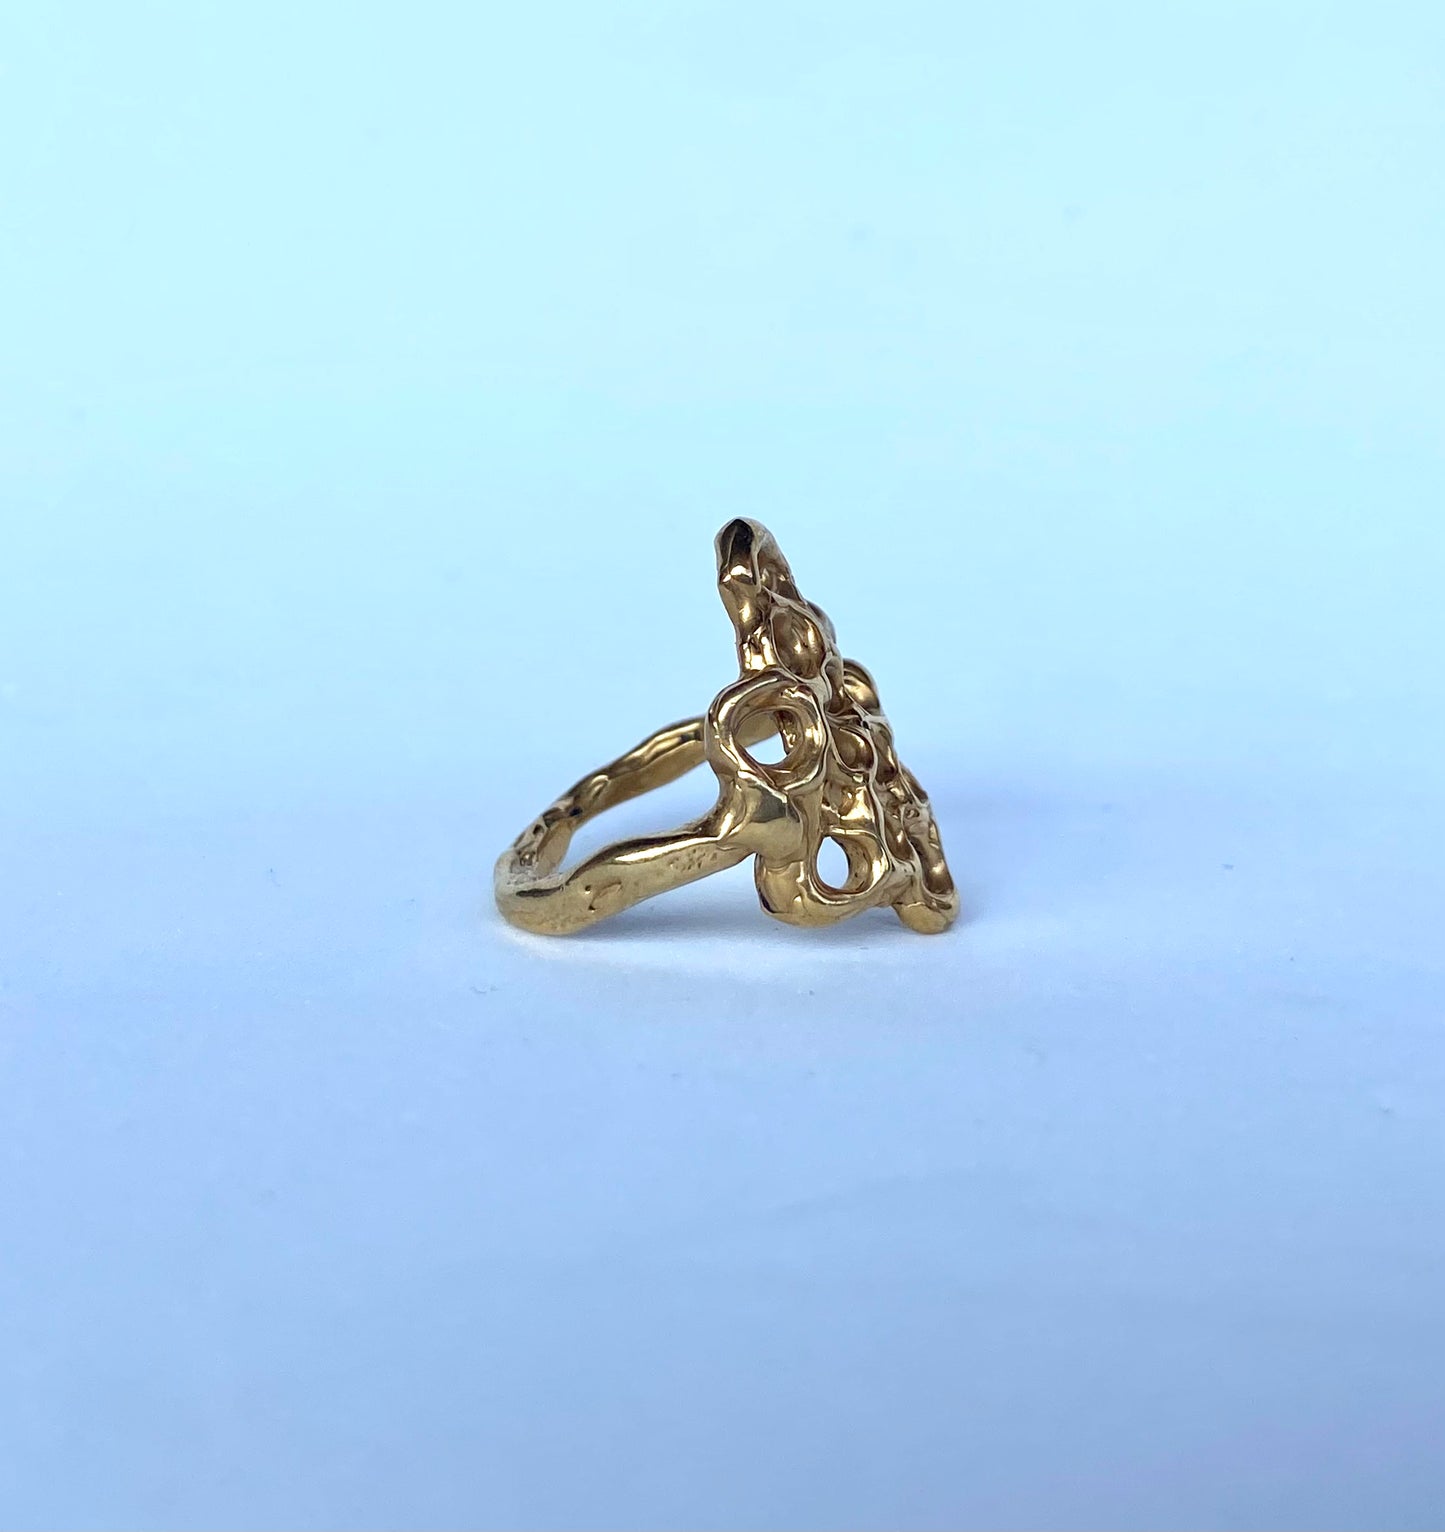 Gold Honeycomb Ring